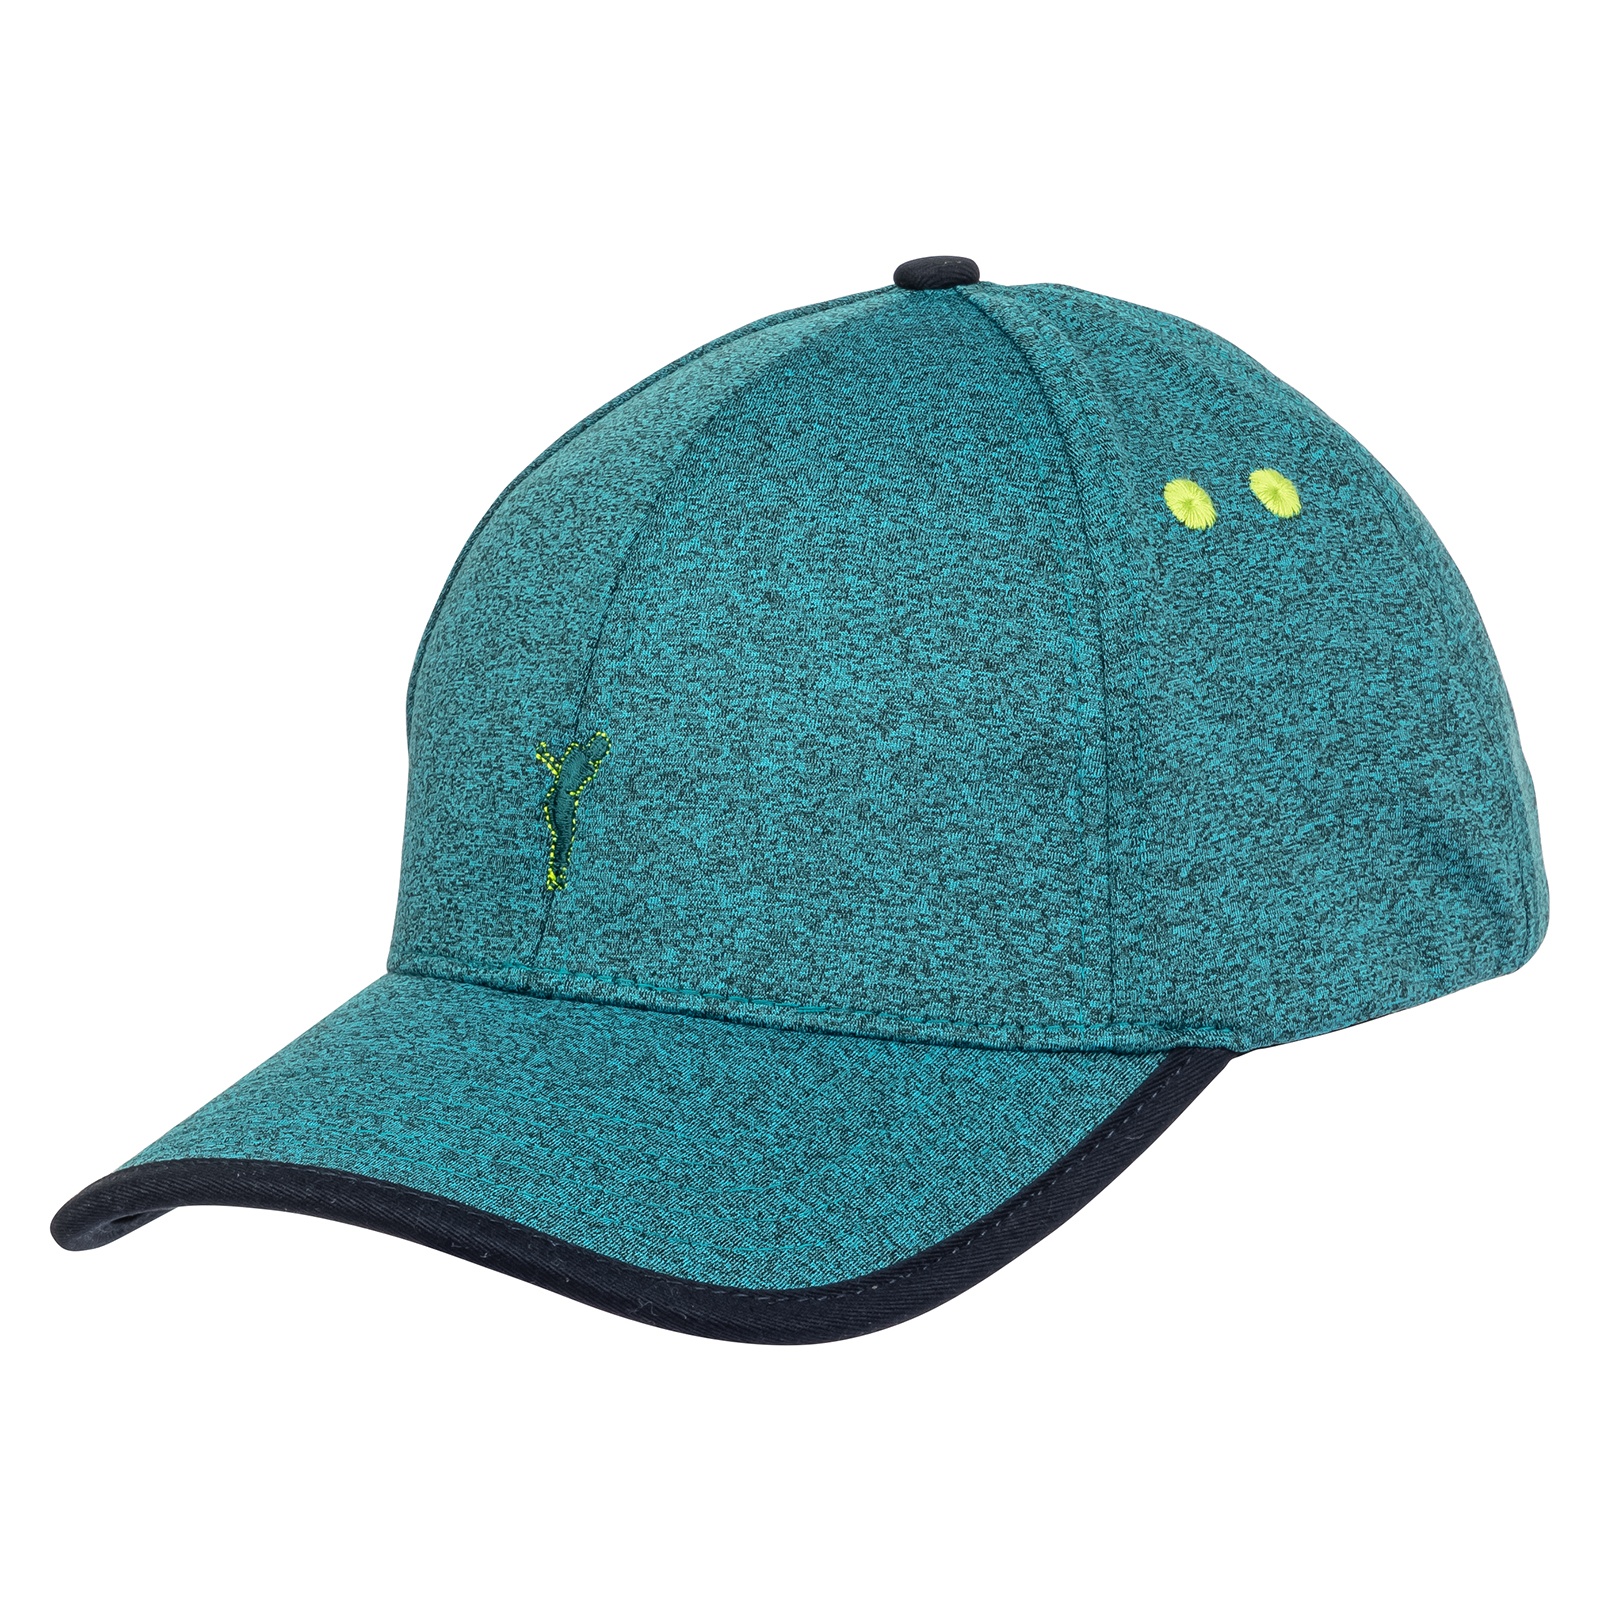 Men's versatile and comfortable 6-panel cap